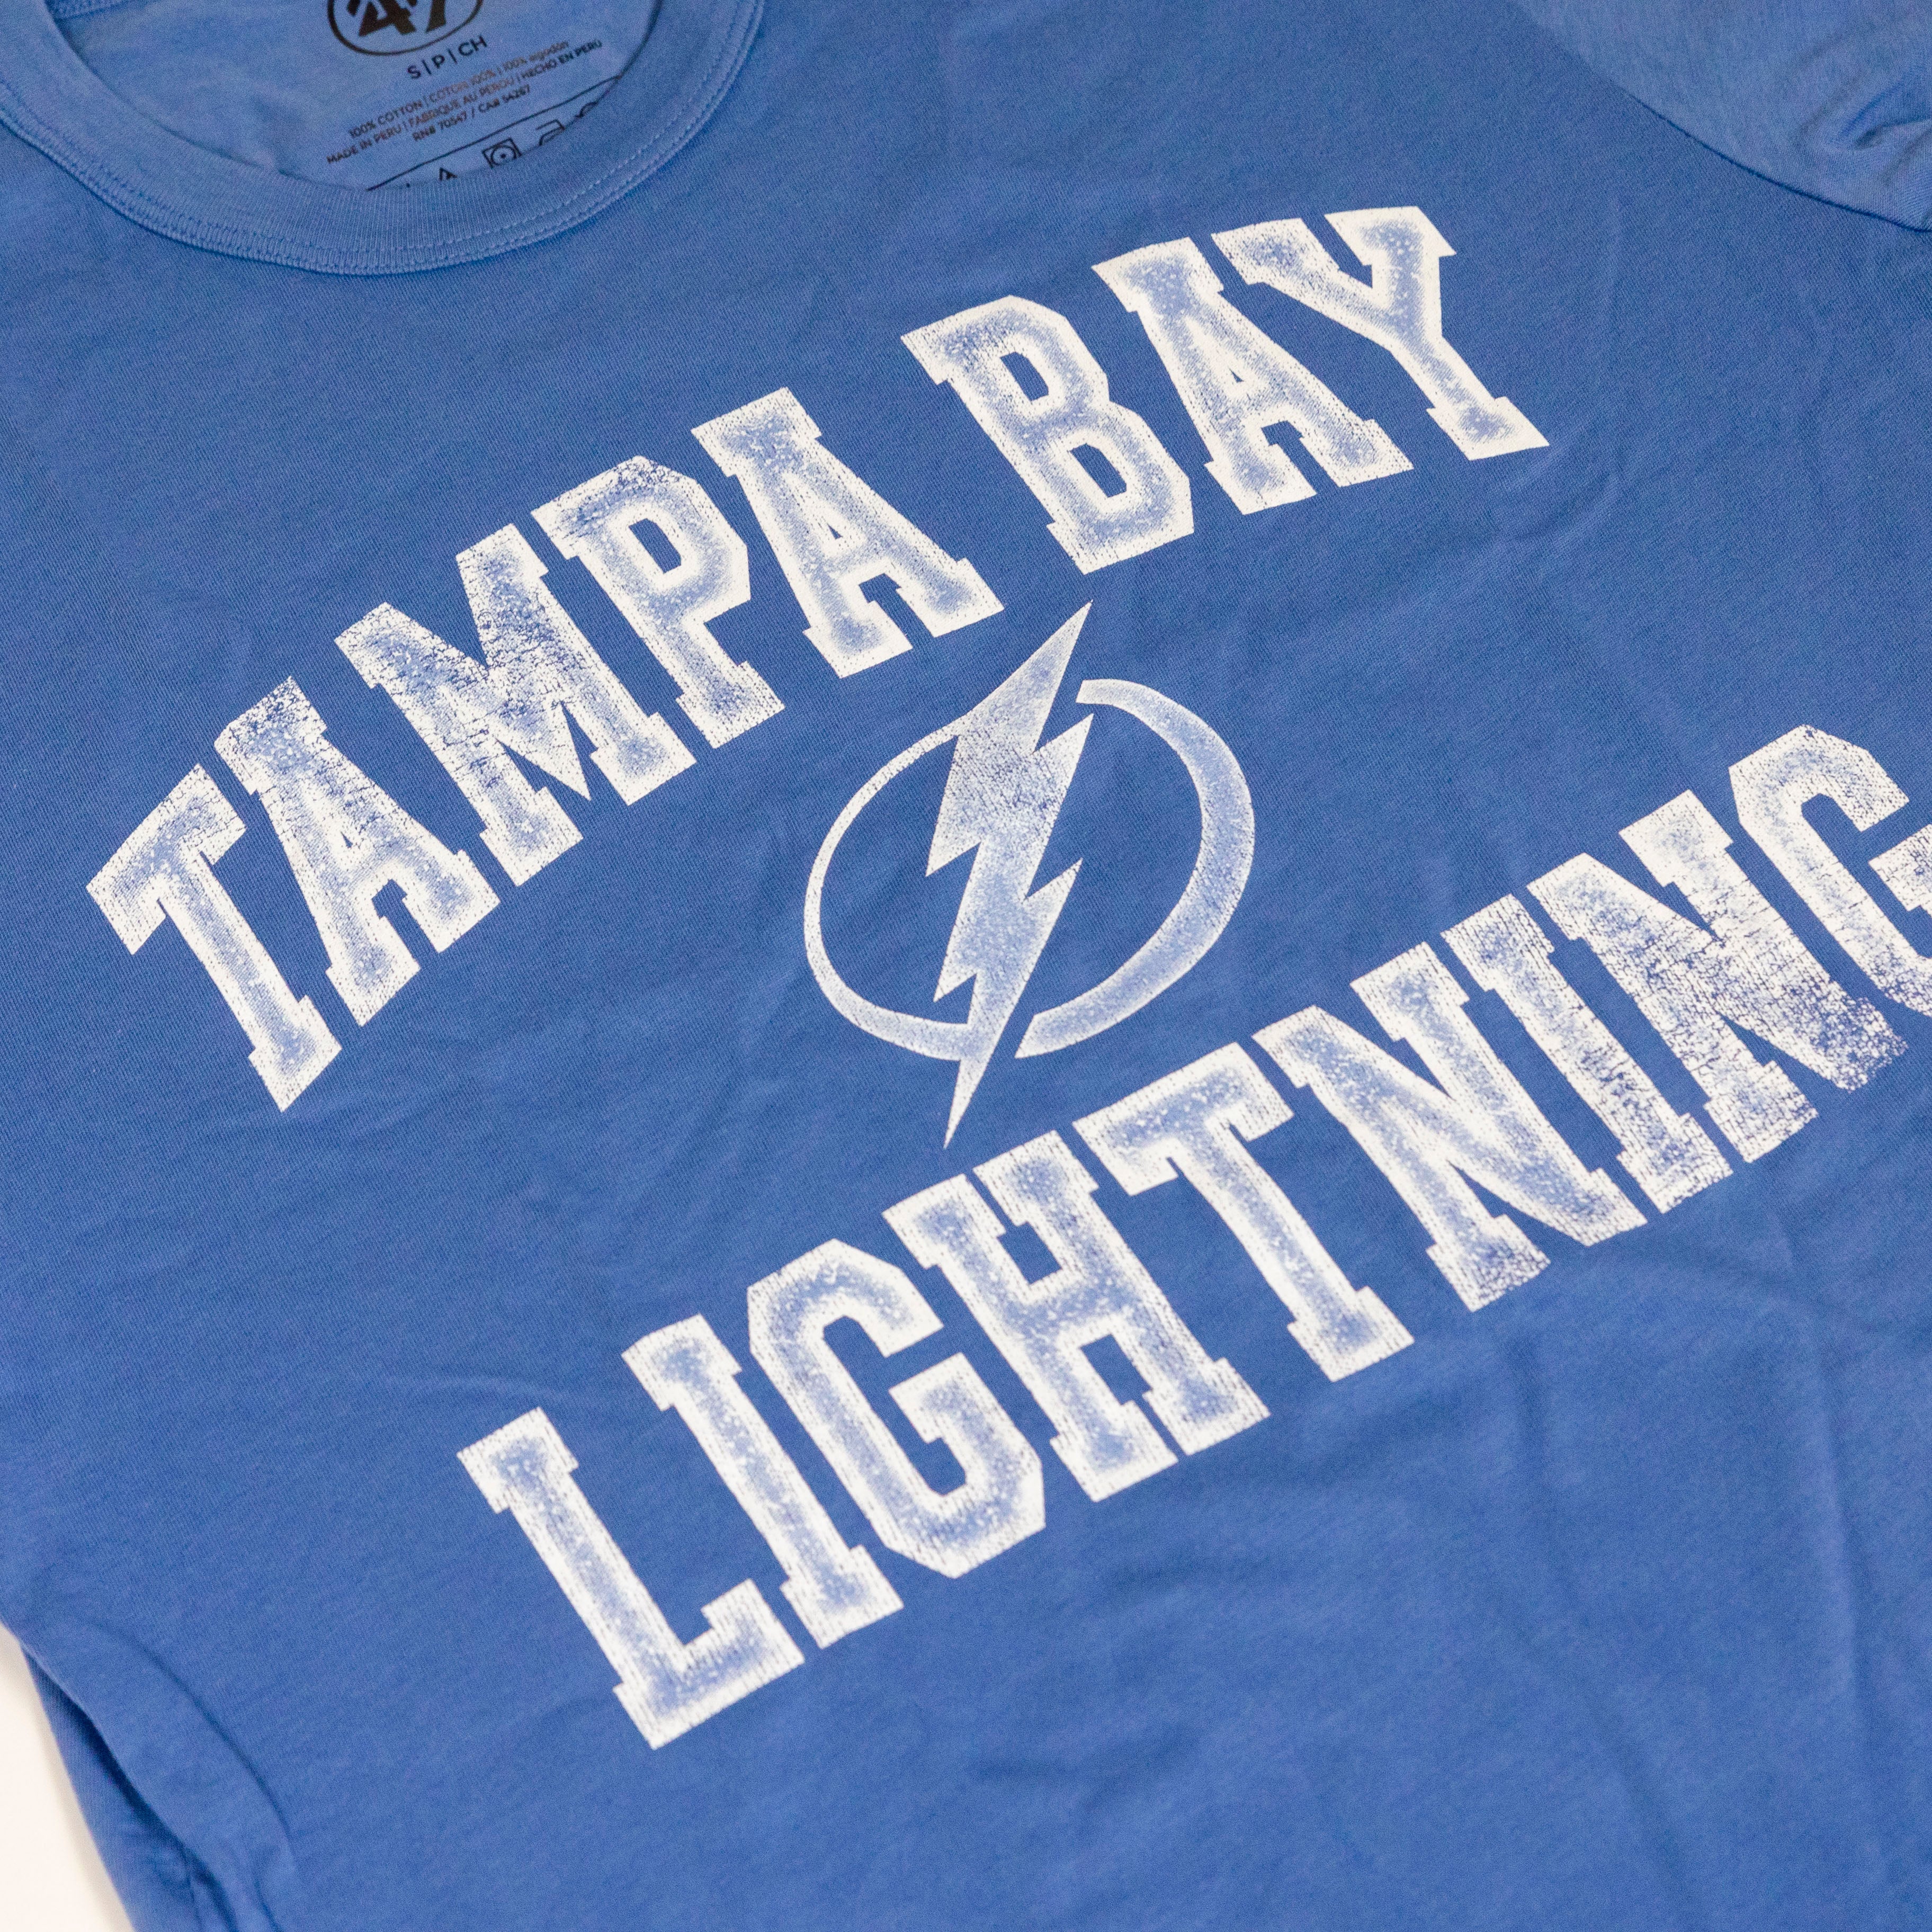 tampa bay lightning jersey cheap